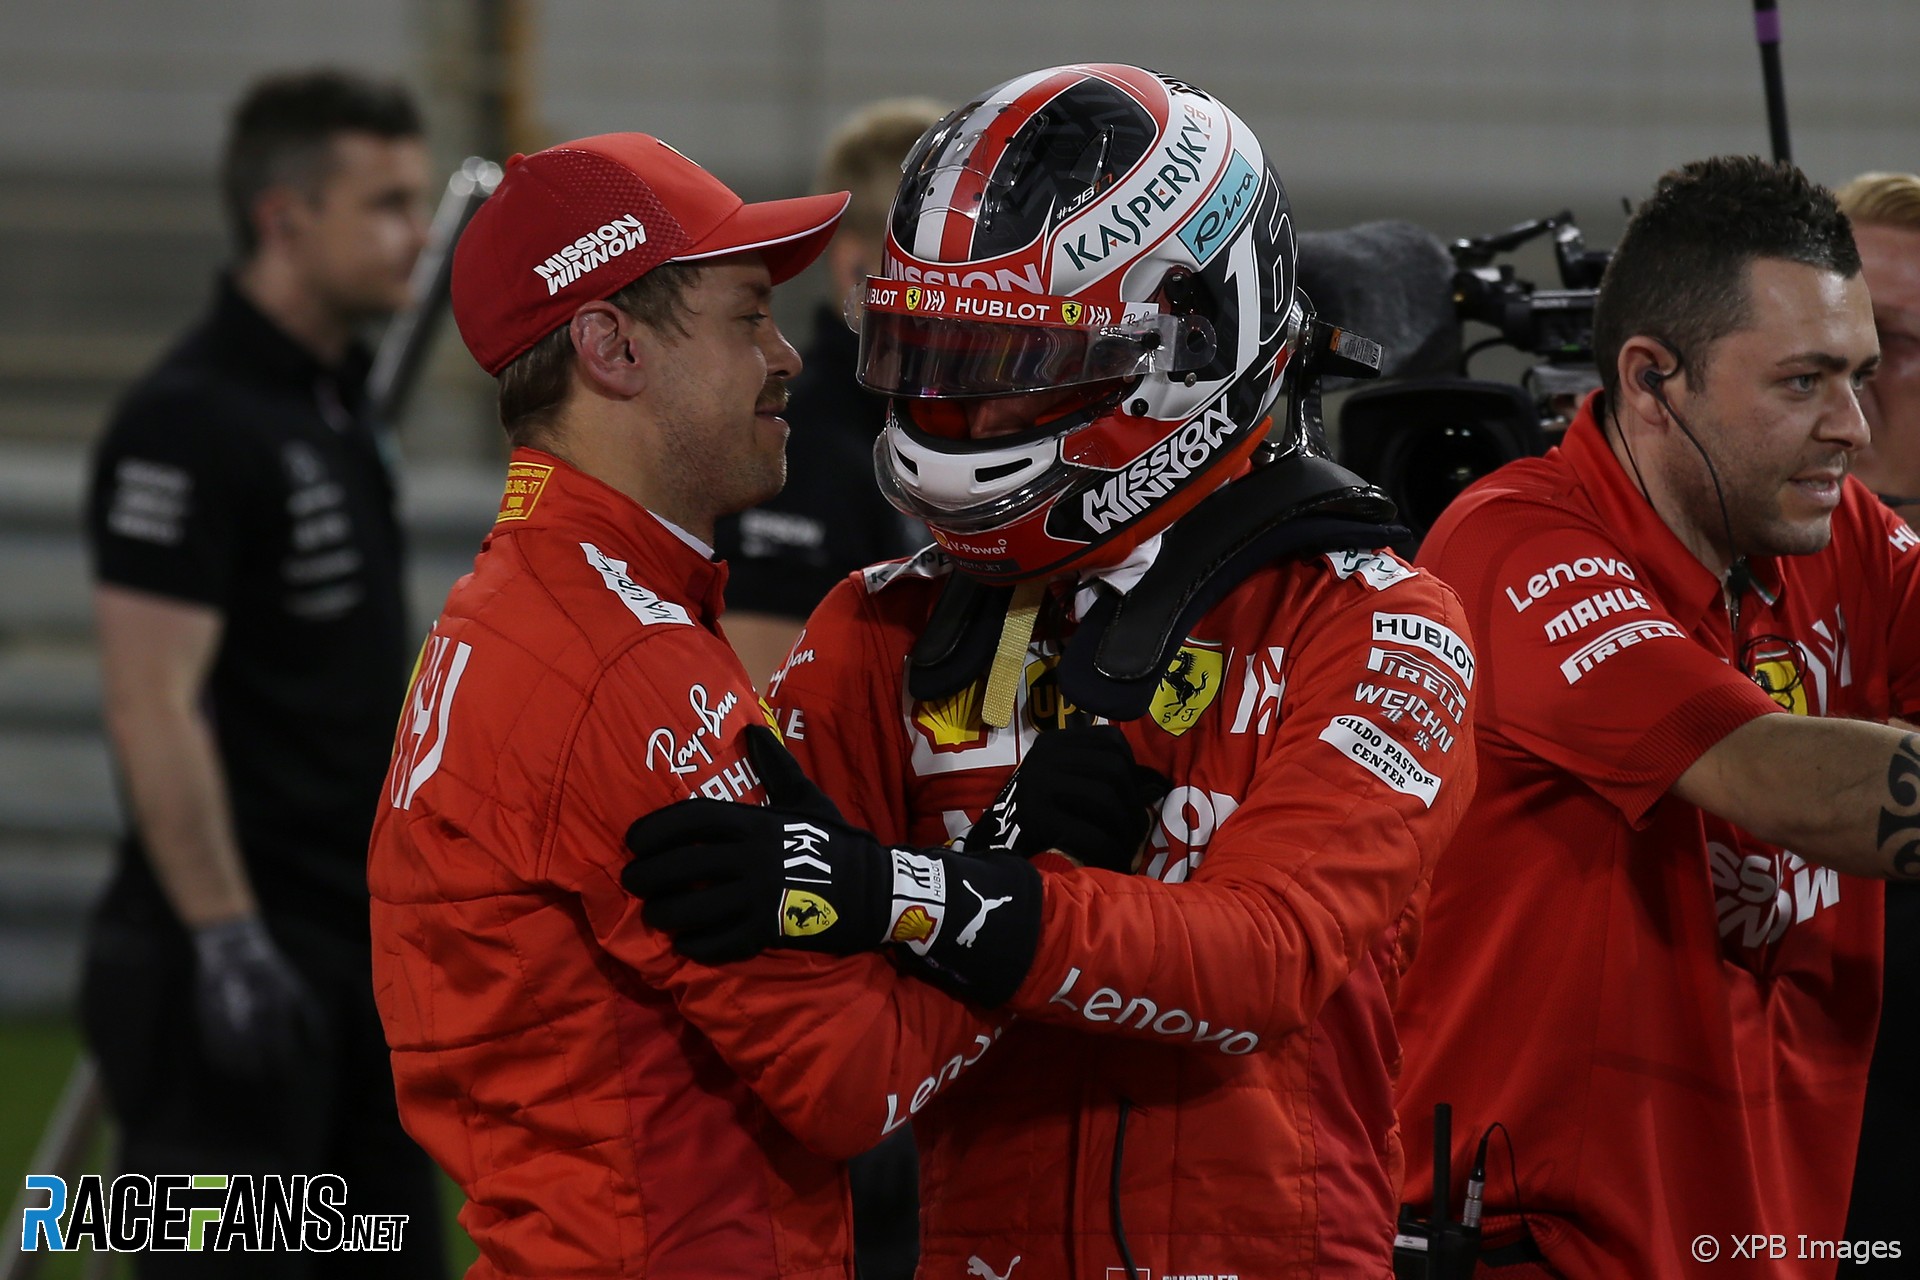 Sebastian Vettel, Charles Leclerc, Ferrari, Bahrain International Circuit, 2019